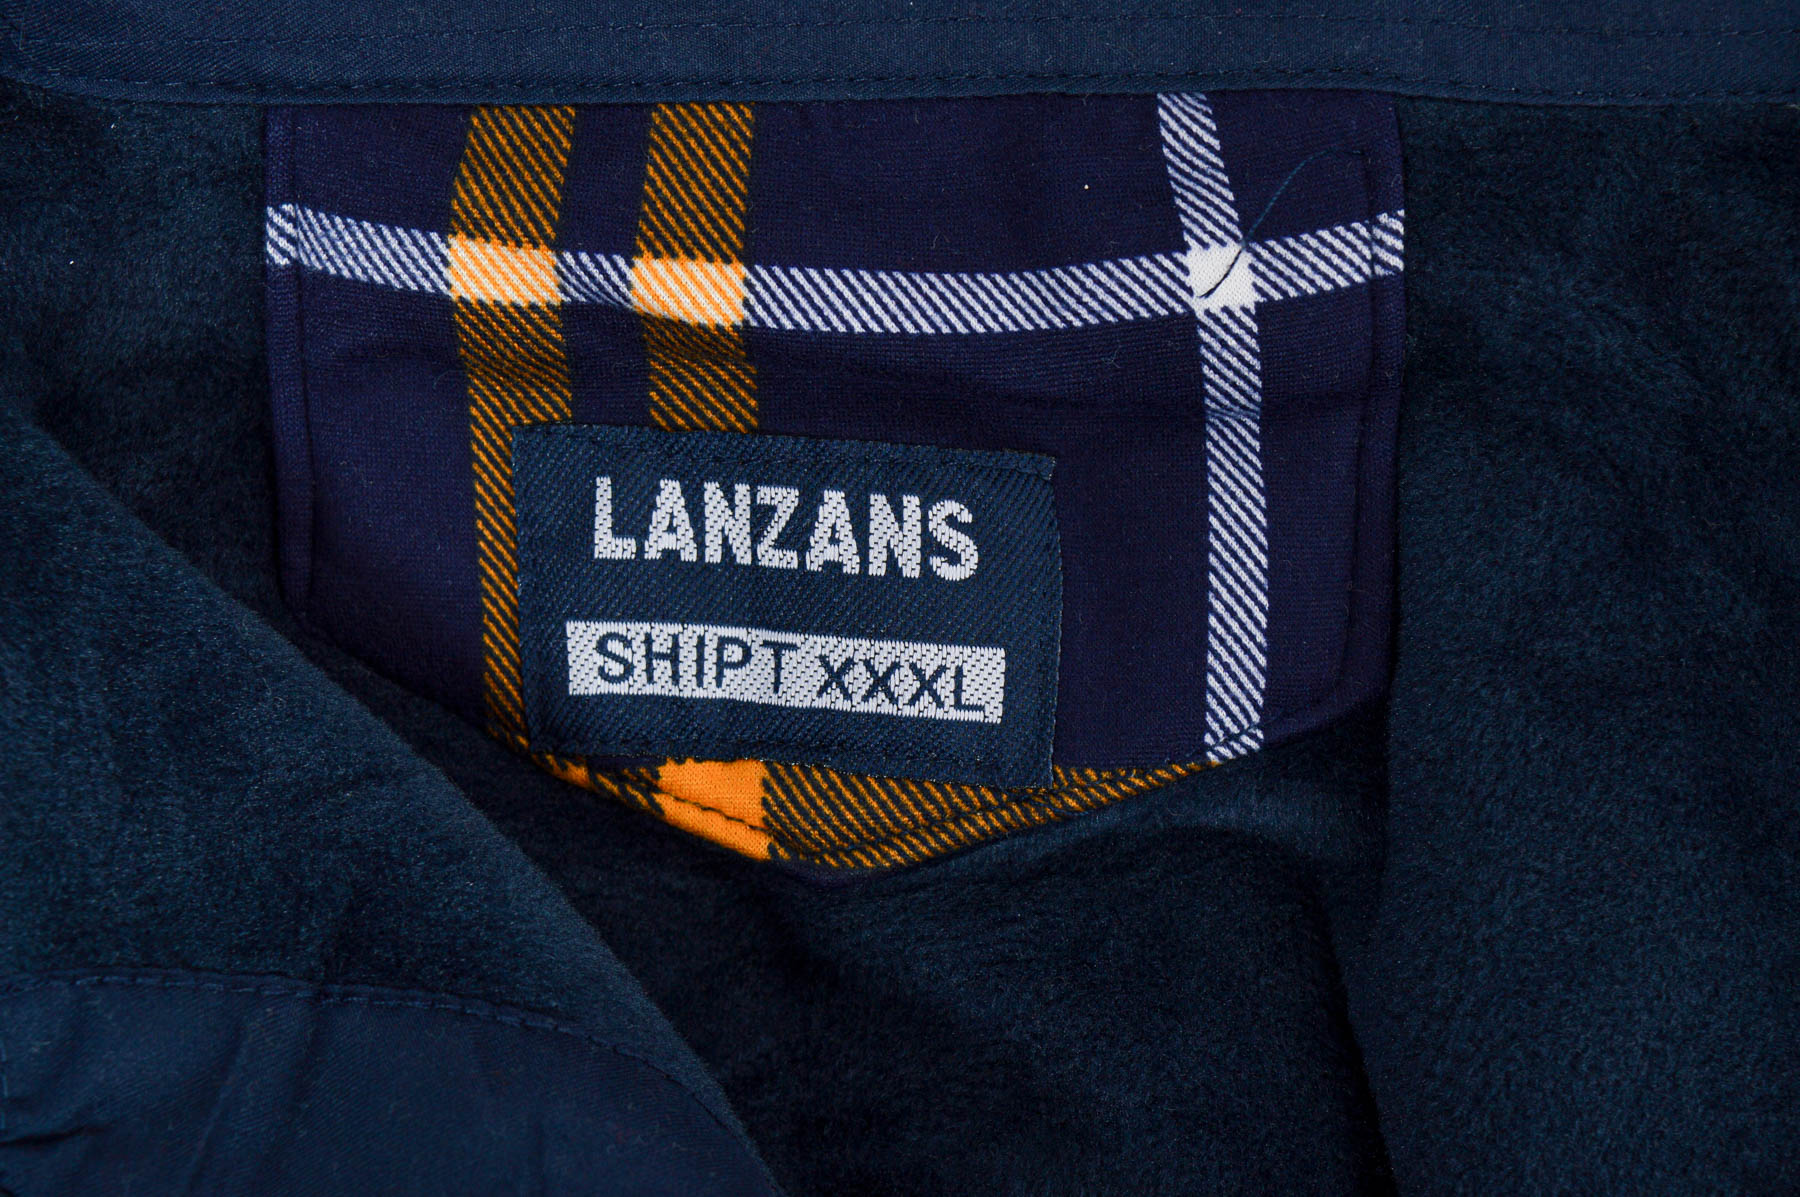 Men's shirt - Lanzans - 2